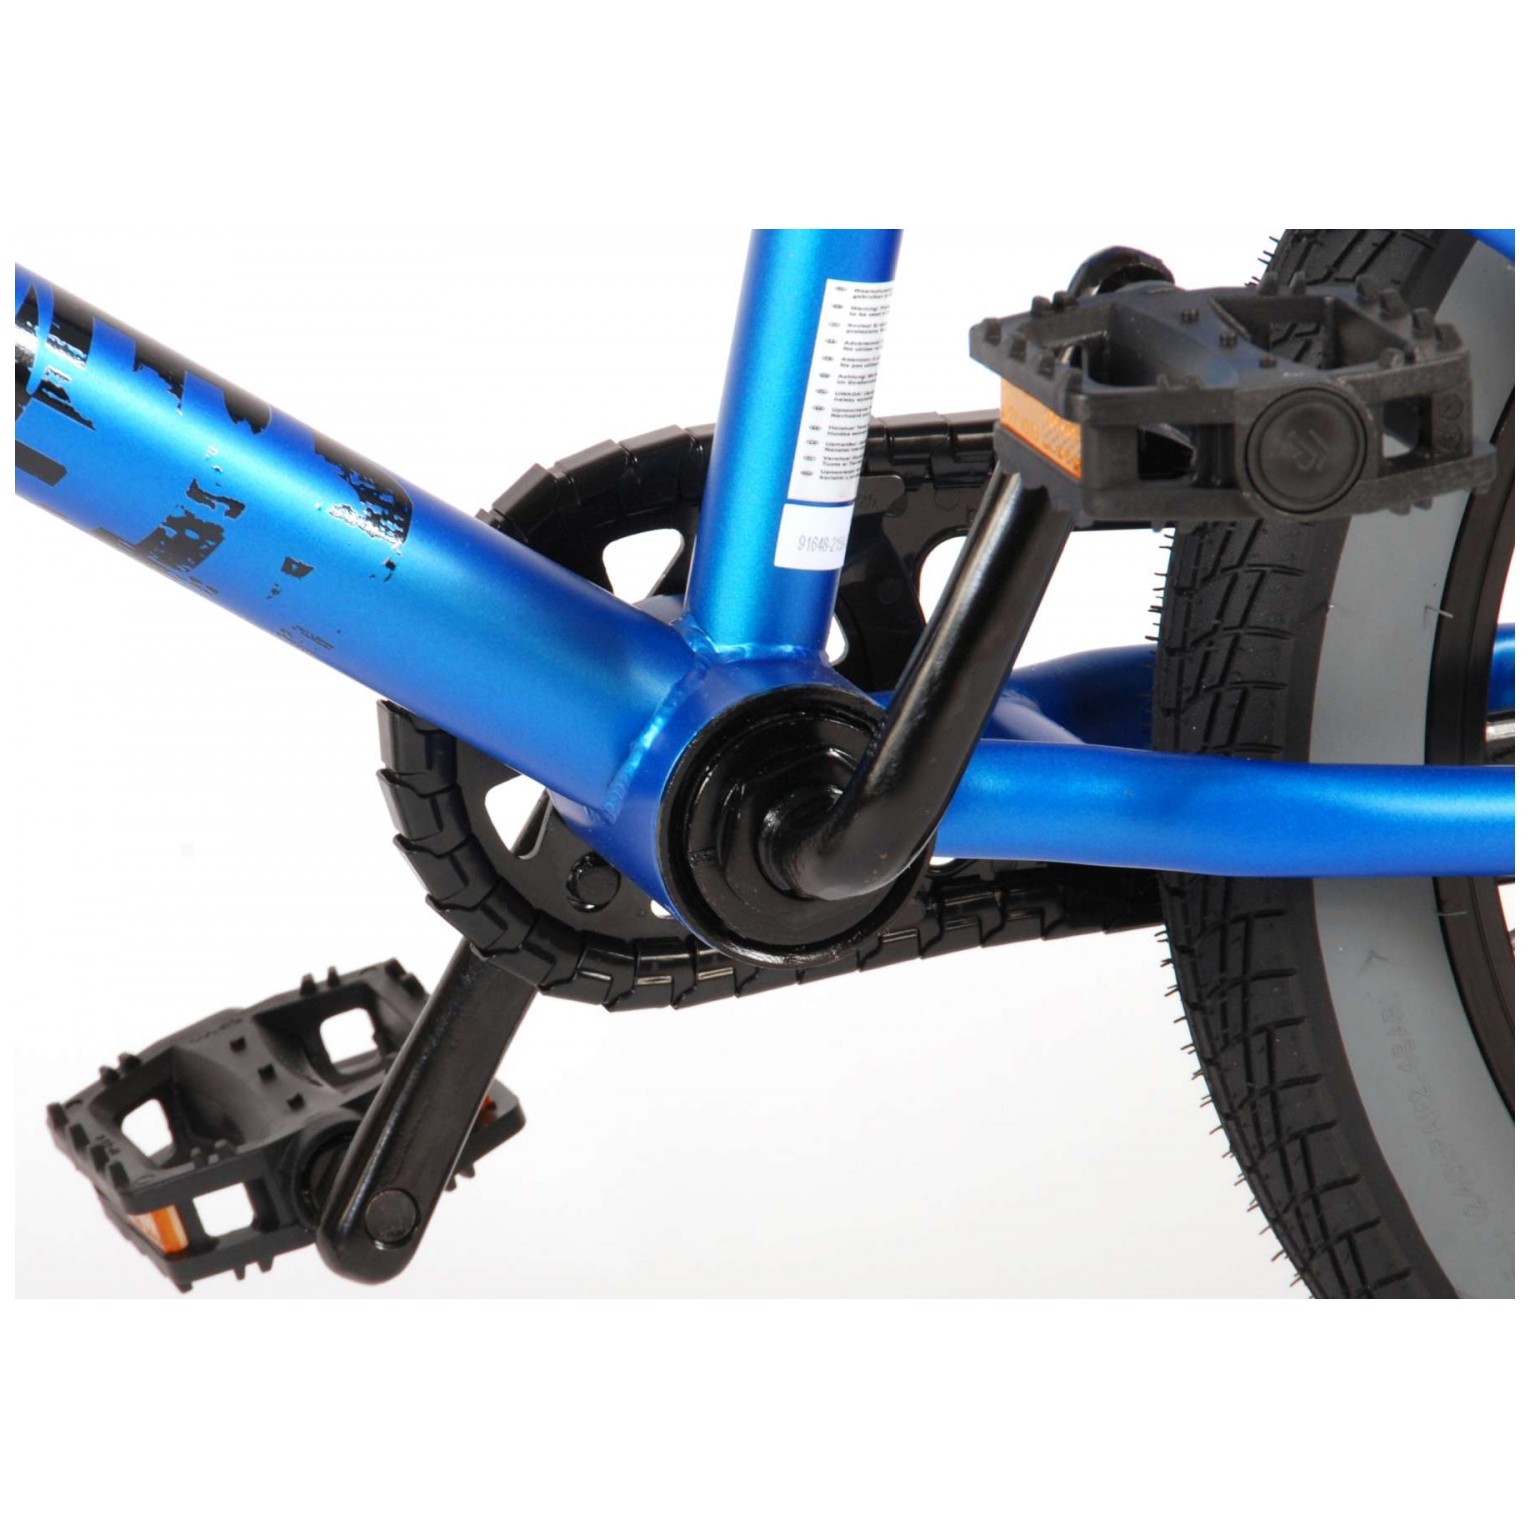 Volare Cool Rider Fiets - 16 inch - blauw - twee handremmen